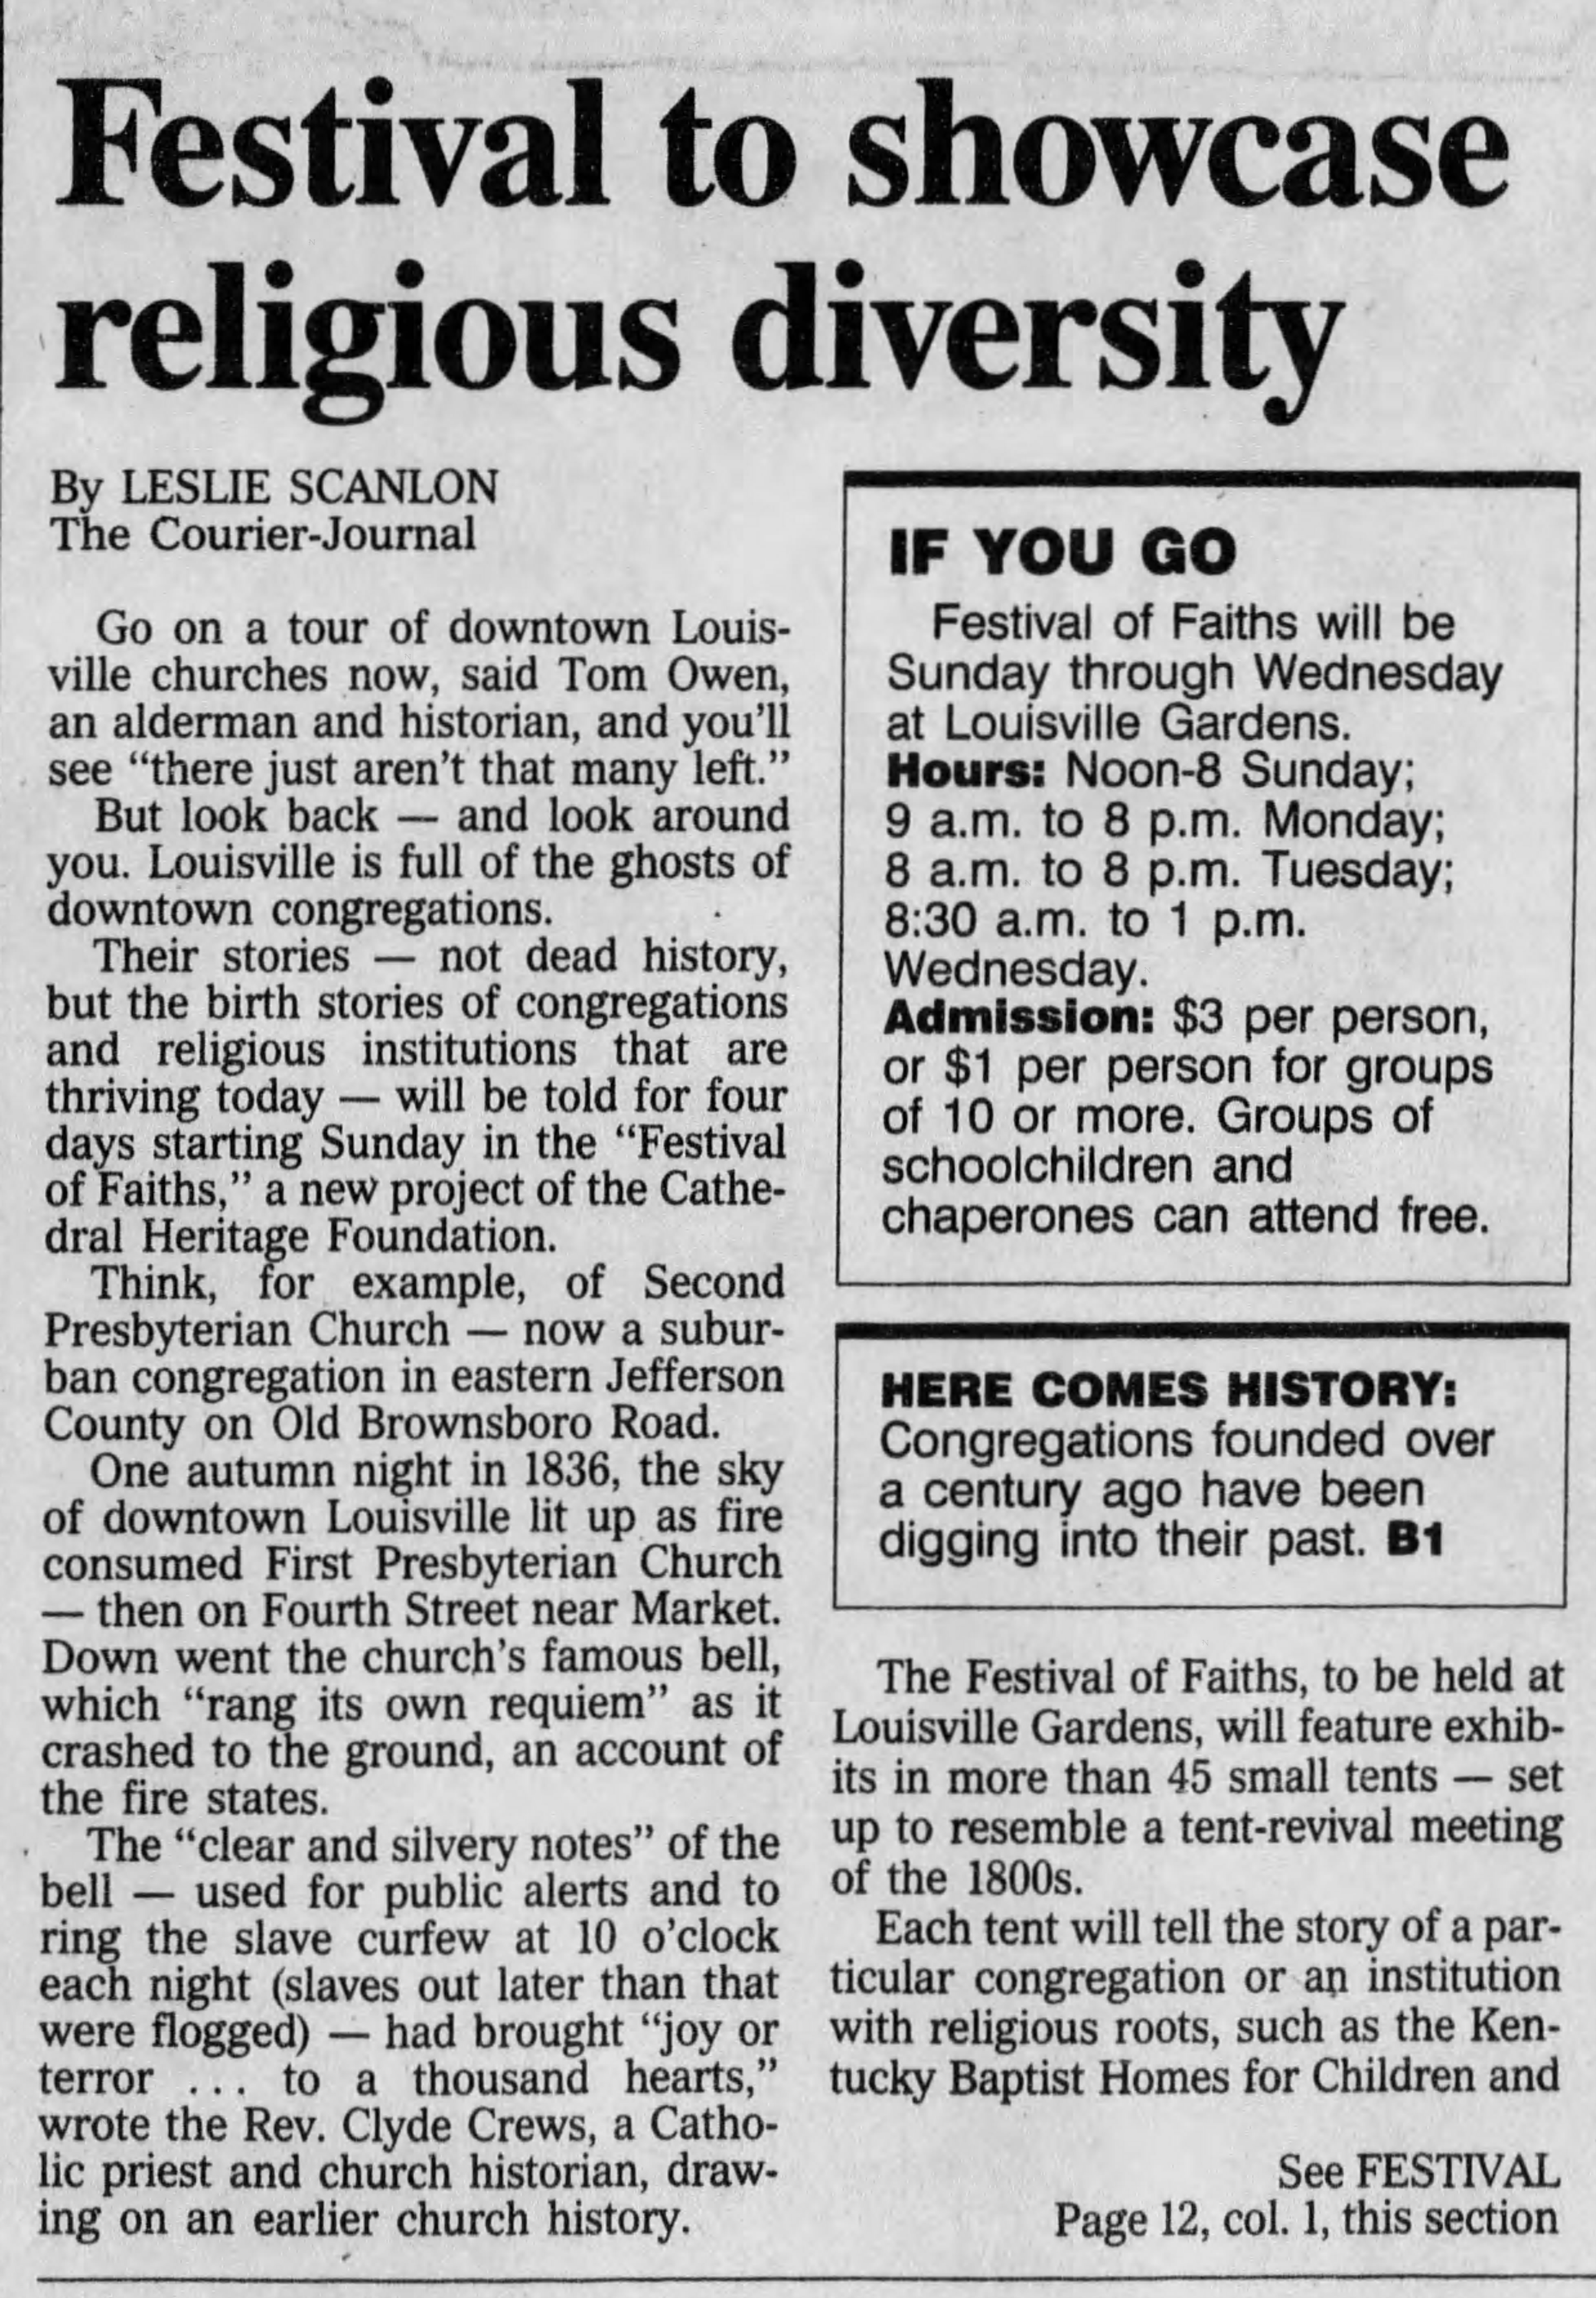 Scanlon, Leslie. “Festival to Showcase Religious Diversity.” The Courier-Journal, 14 Nov. 1996, p. 1.